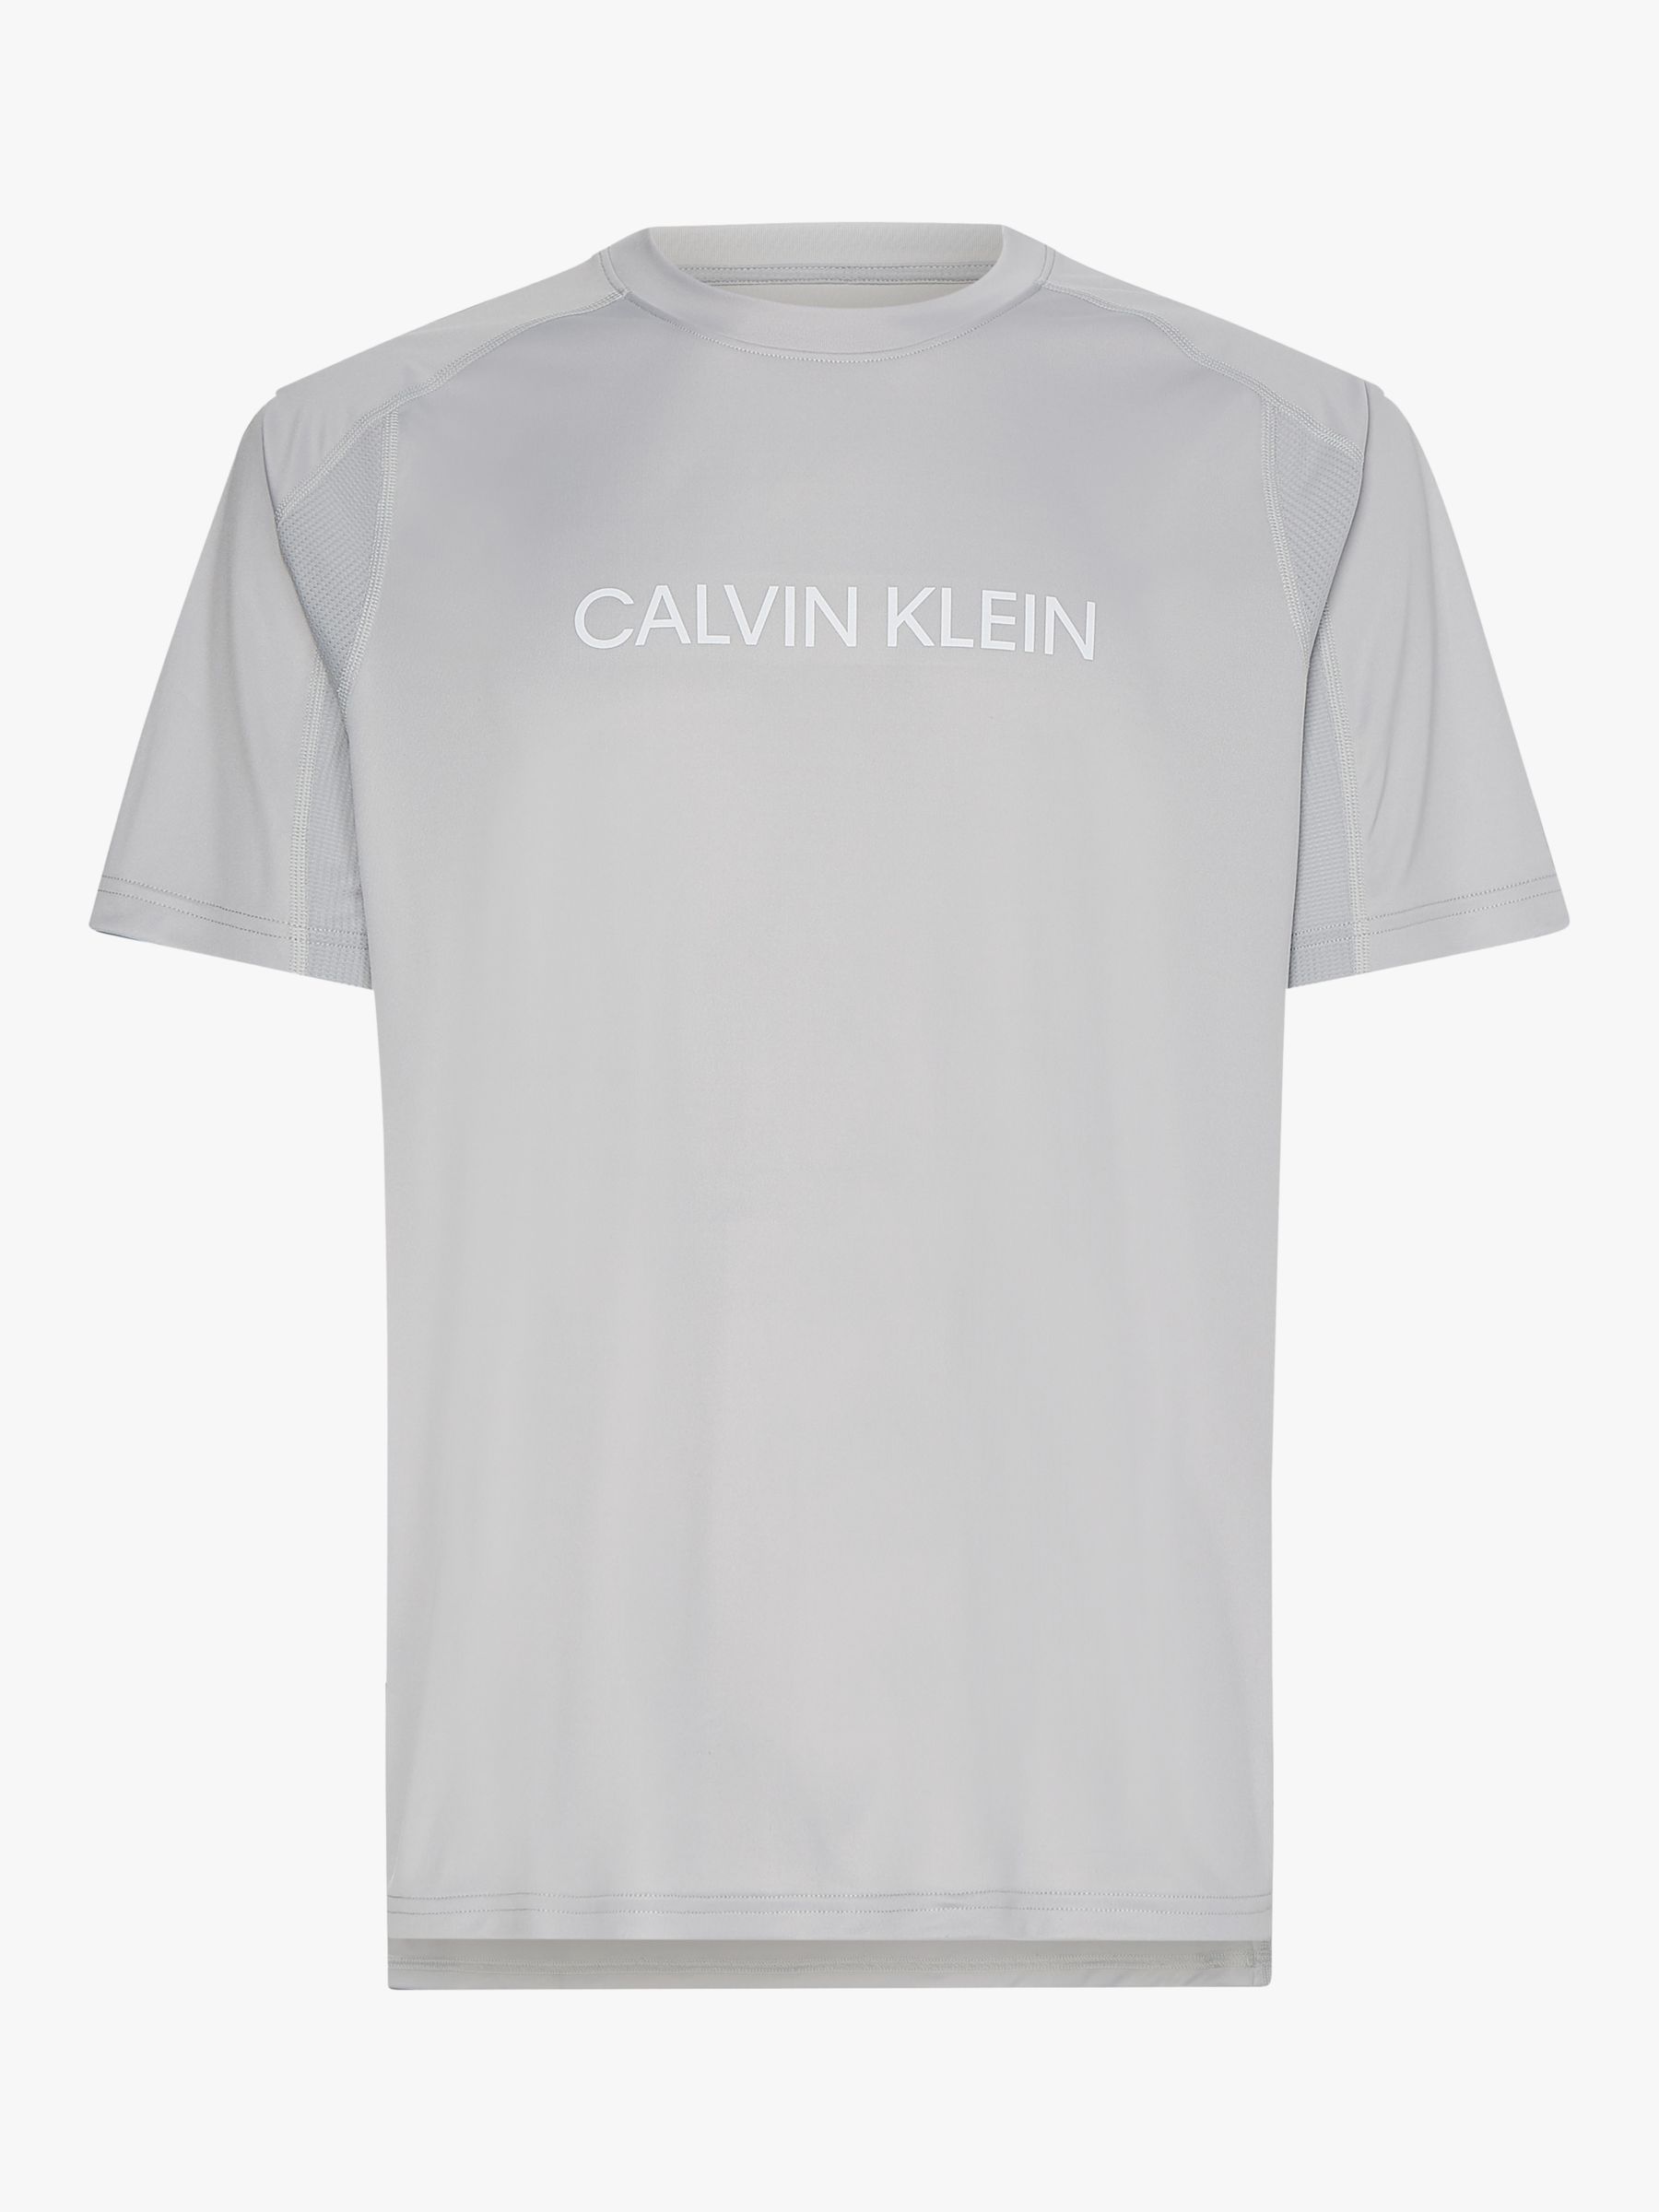 Calvin Klein Performance T-Shirt, Grey